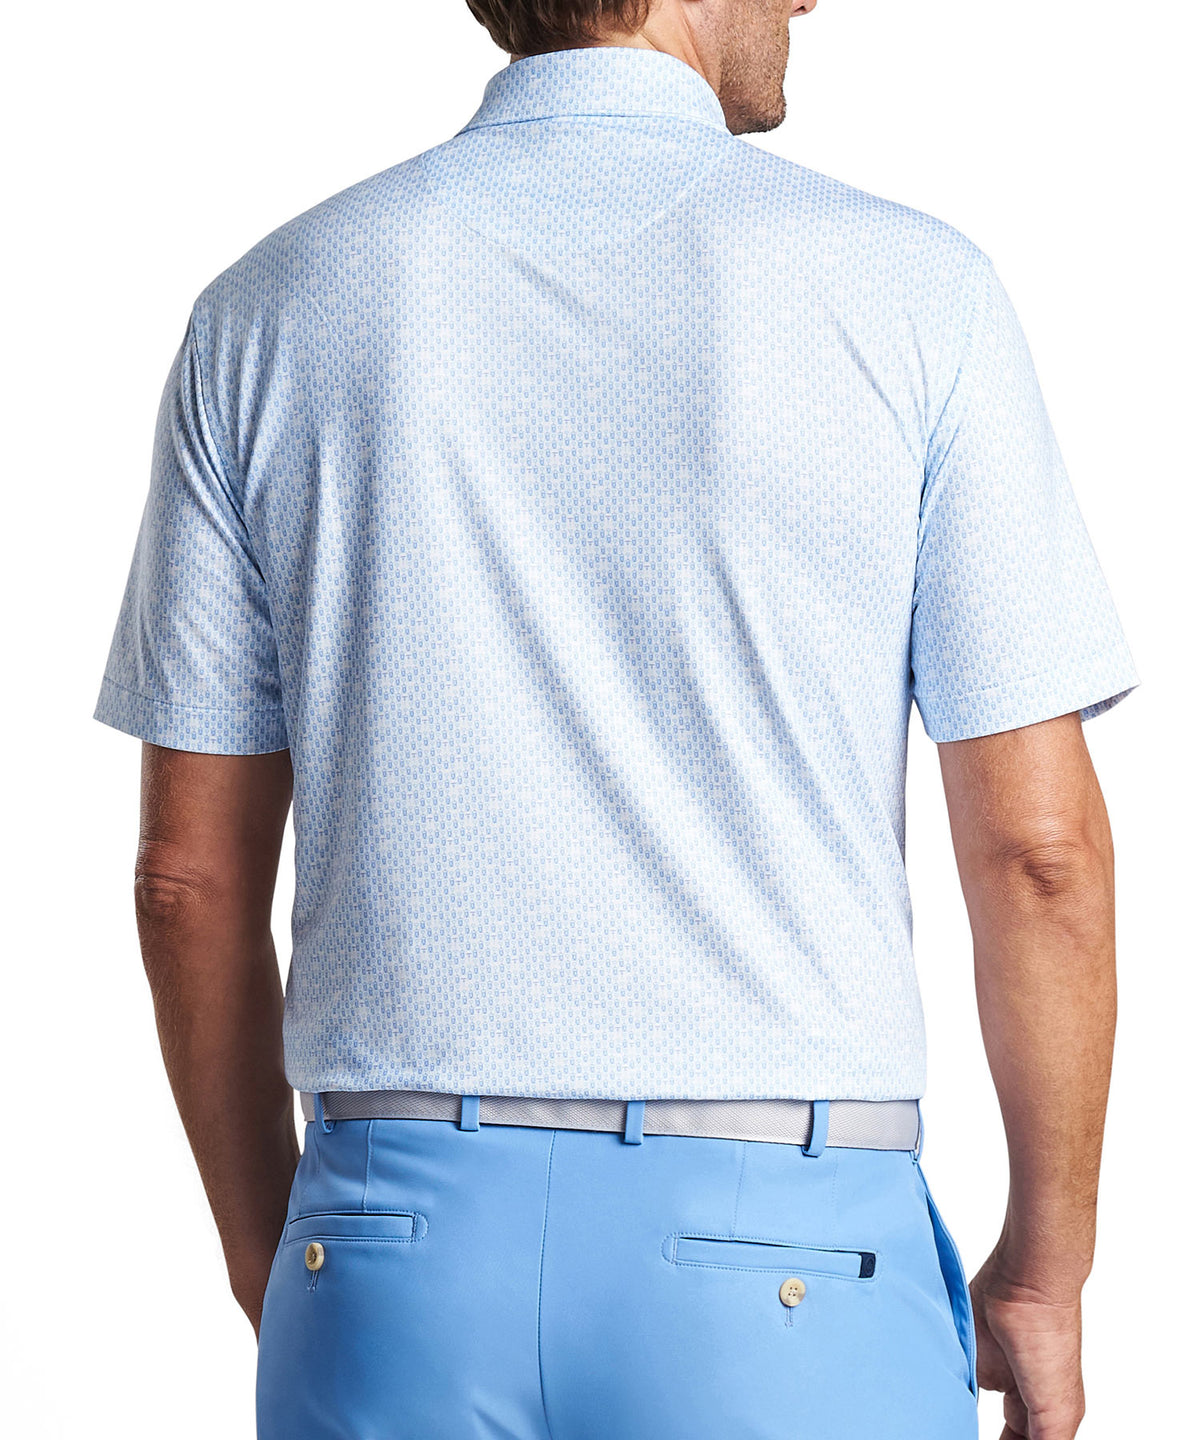 Peter Millar Short Sleeve Corkscrew Print Polo Knit Shirt, Big & Tall